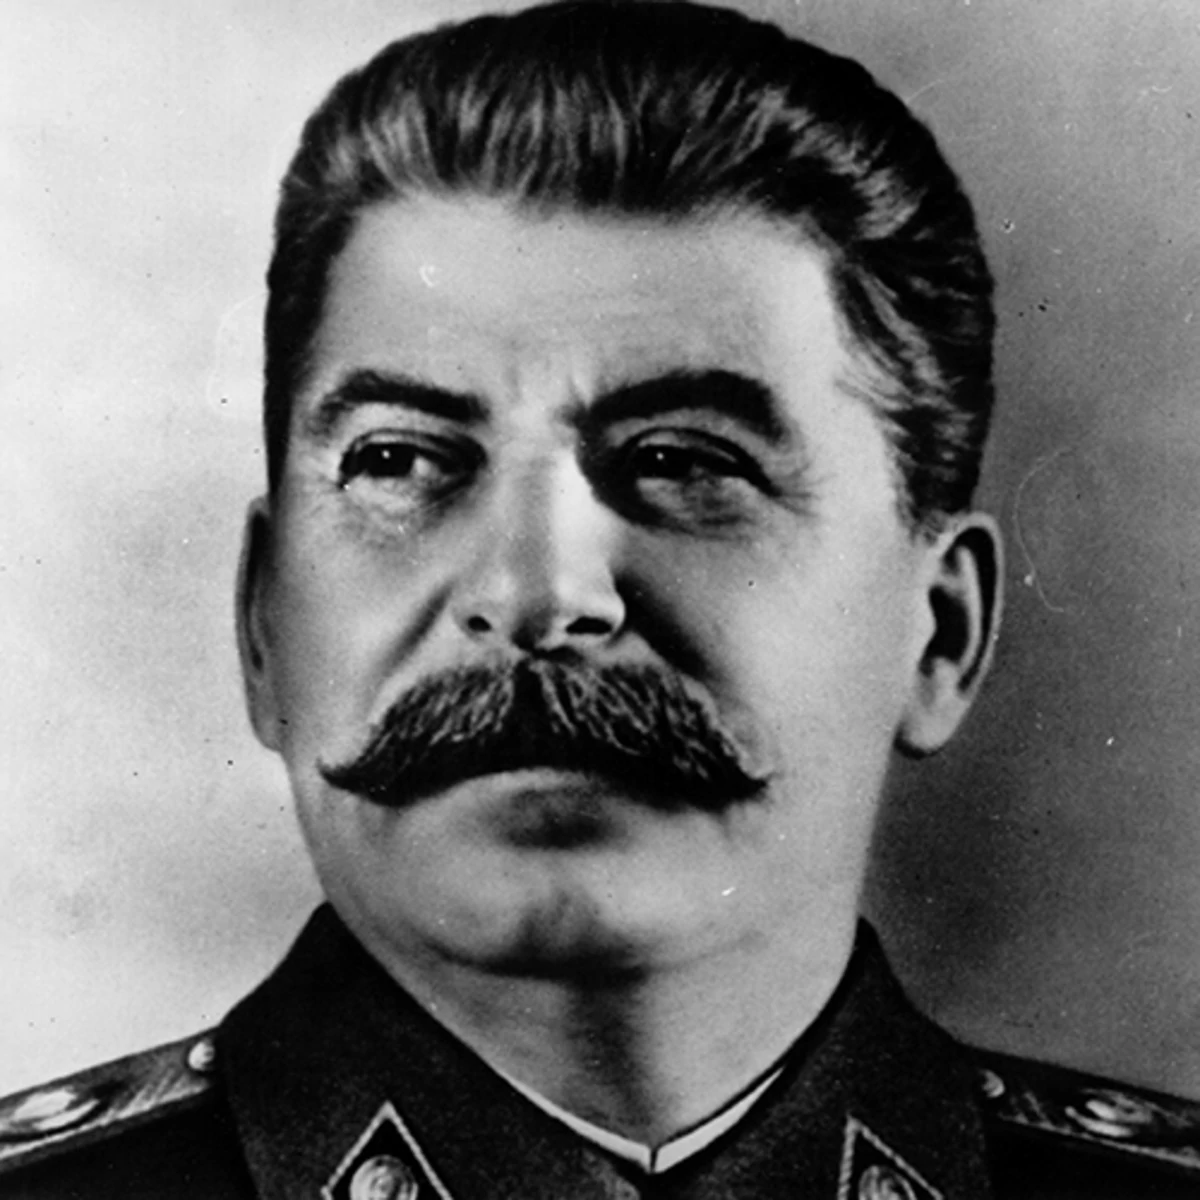 Stalin photo.png